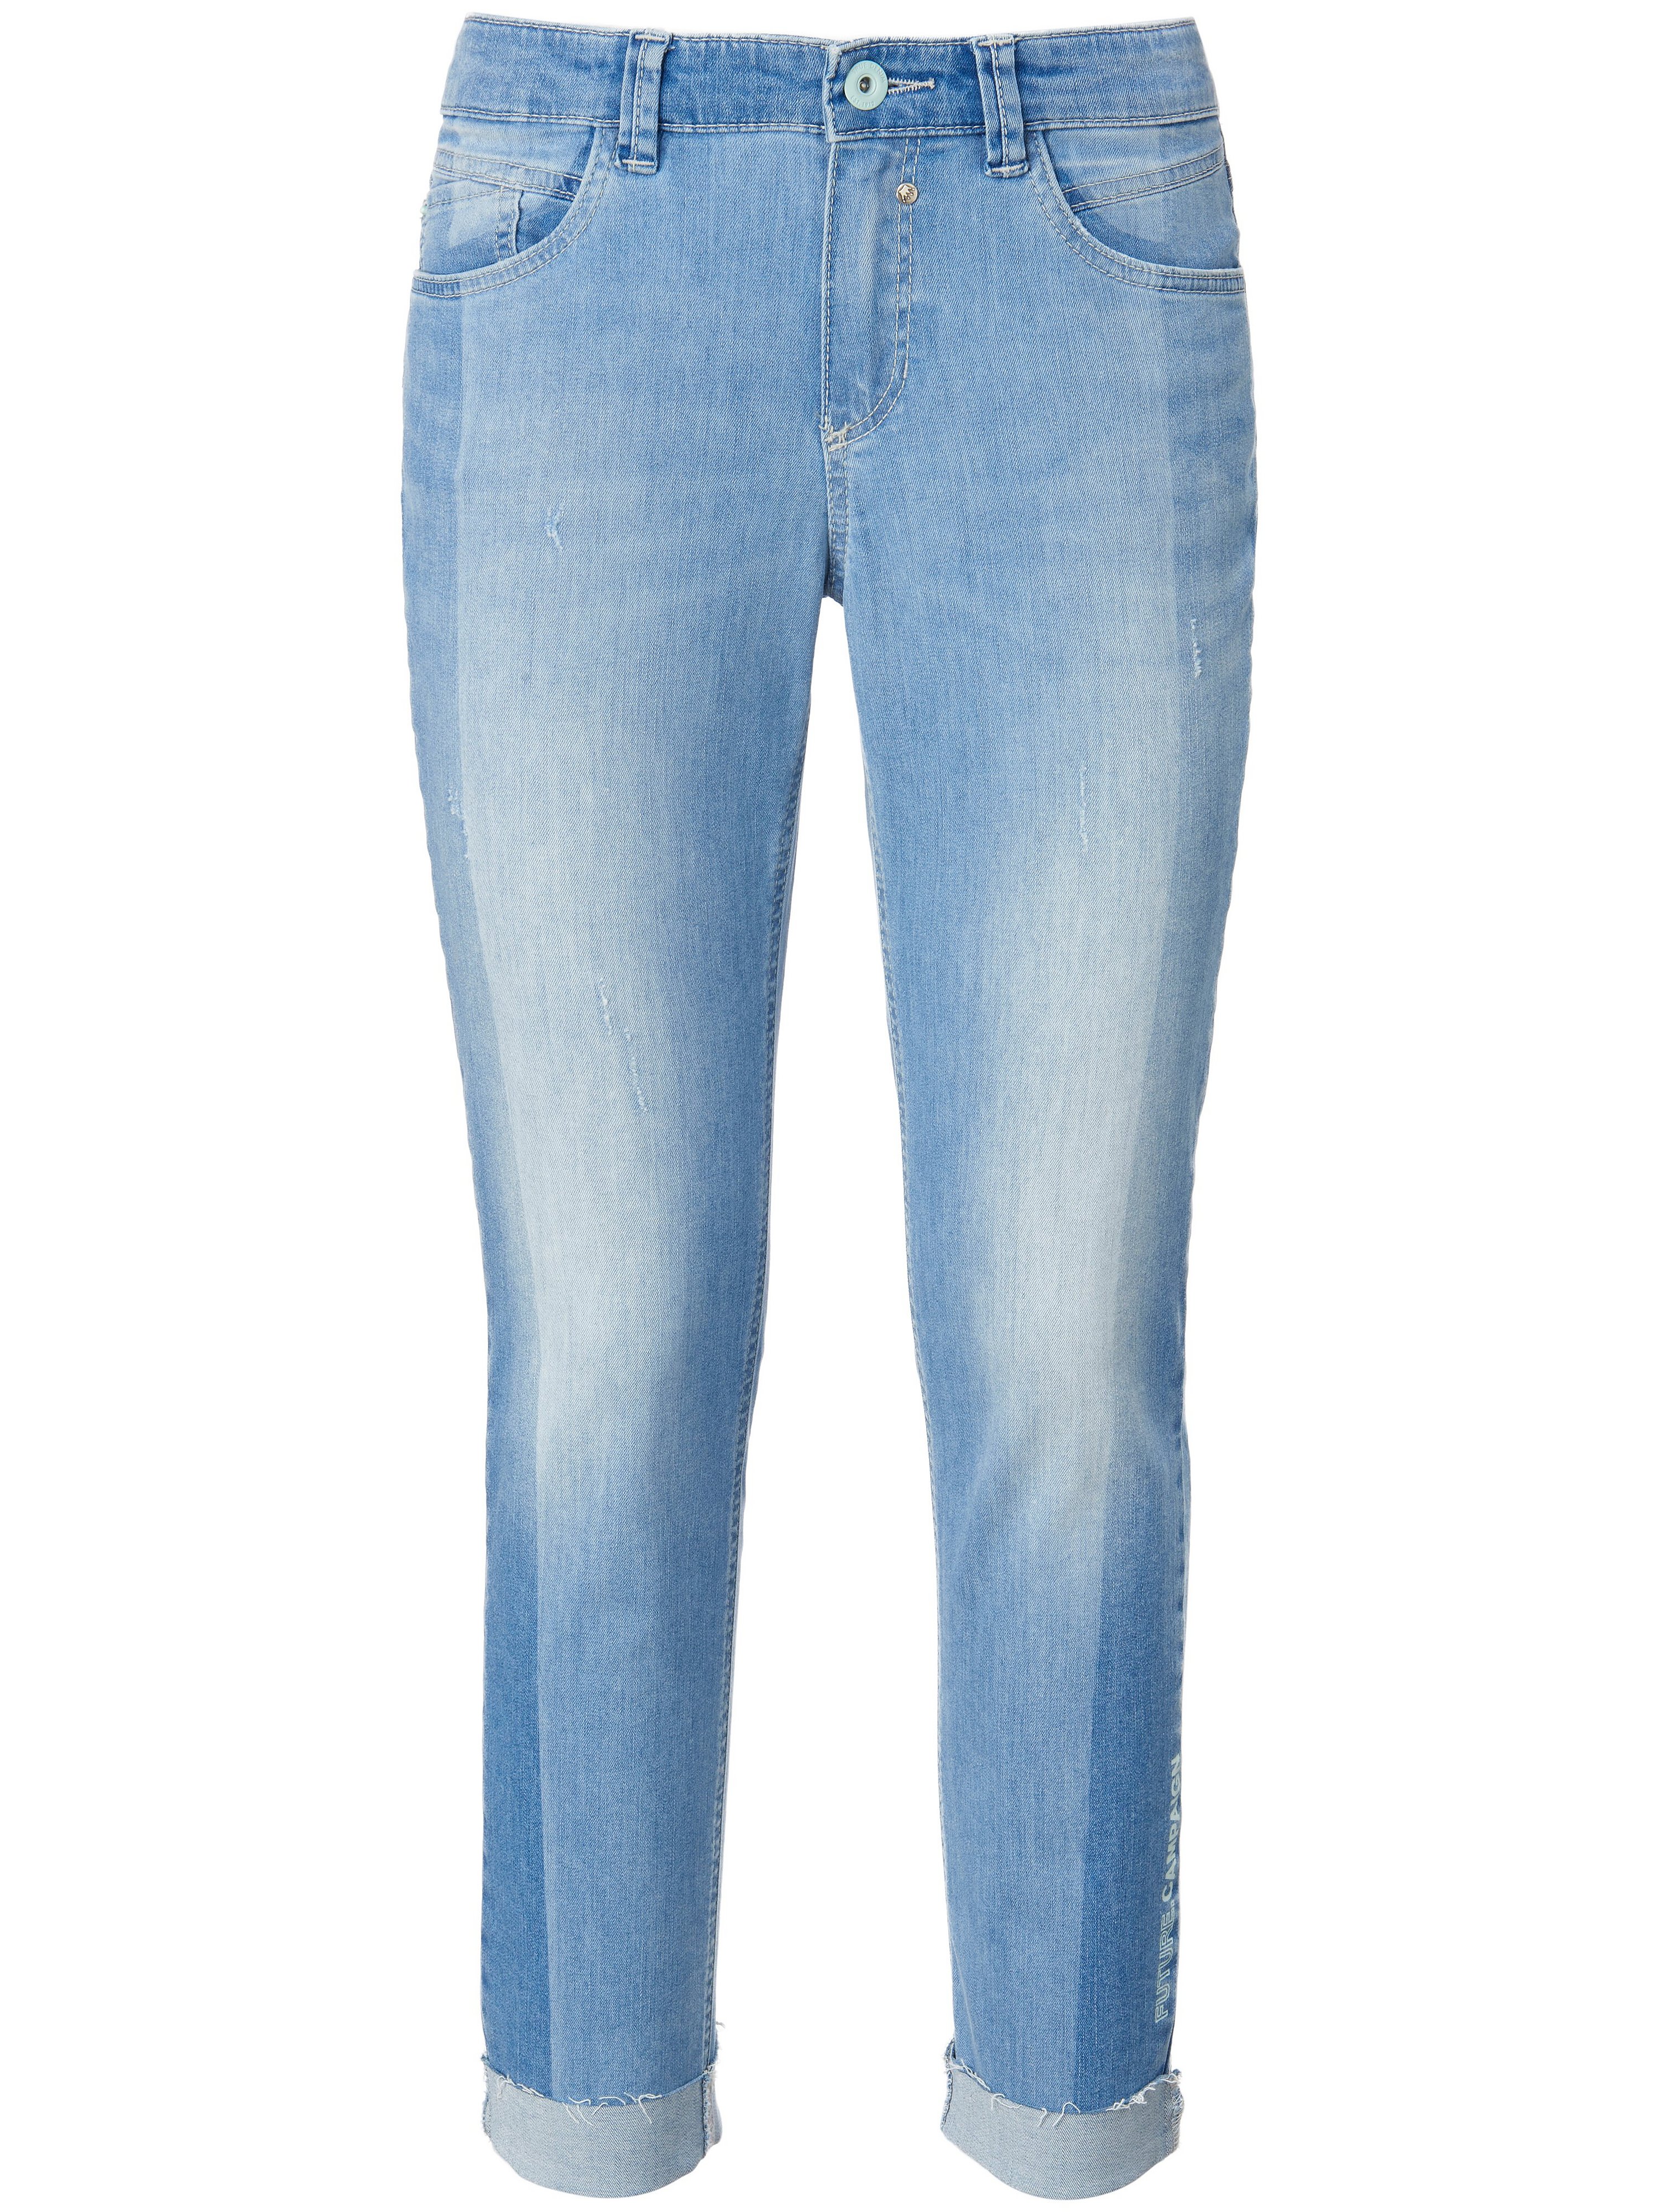 Skinny jeans model Gill Van Glücksmoment denim